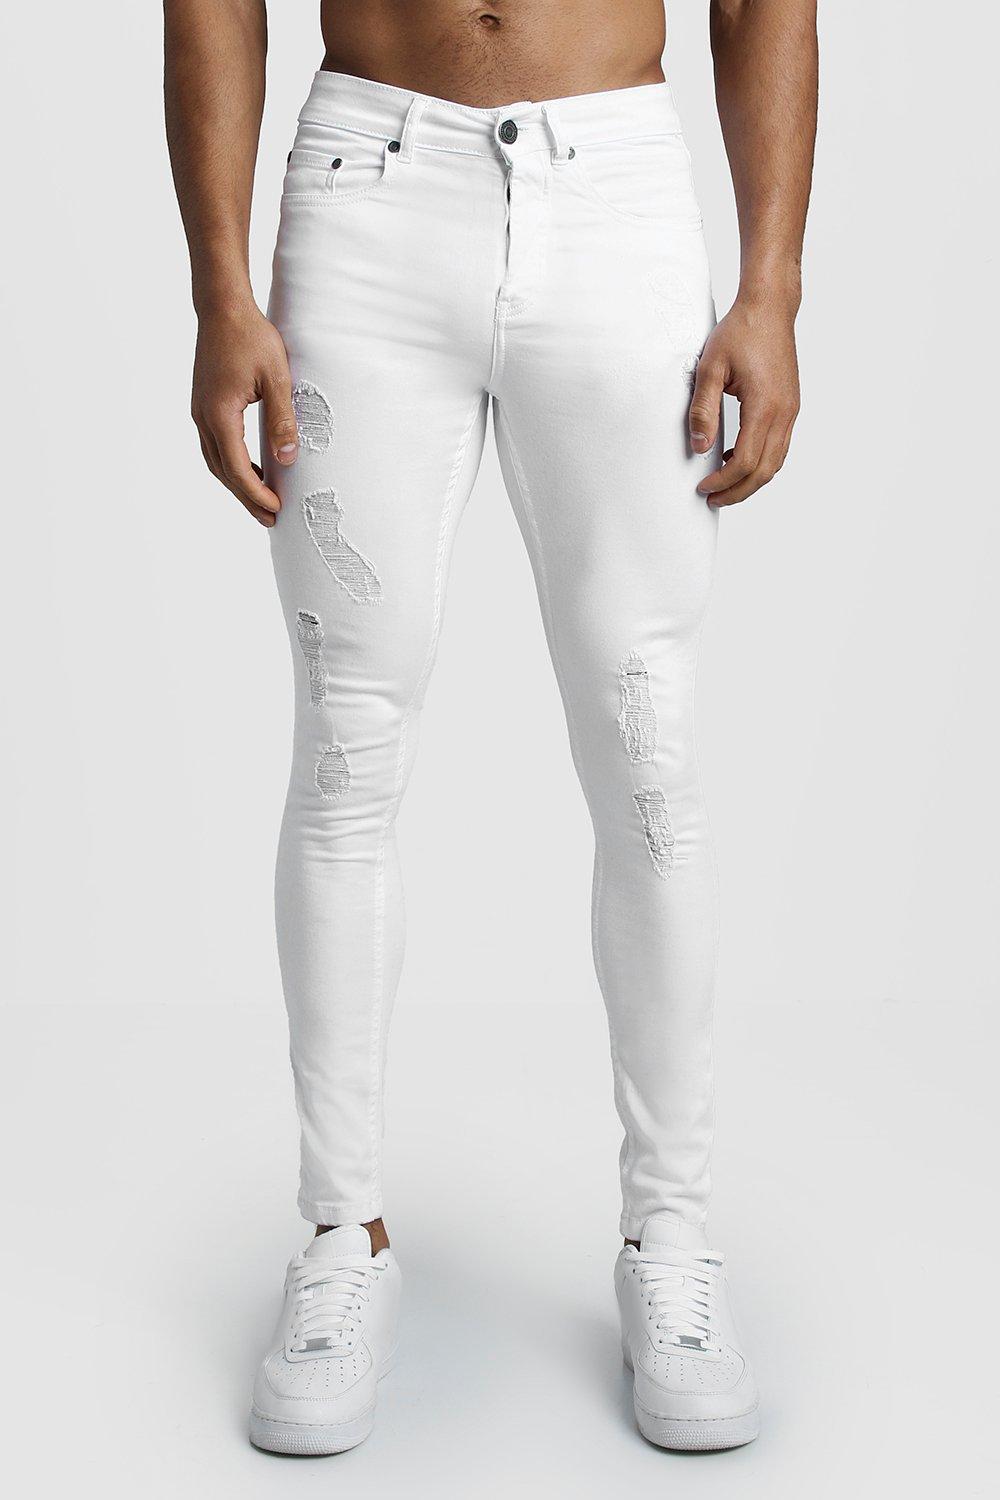 white spray on jeans mens